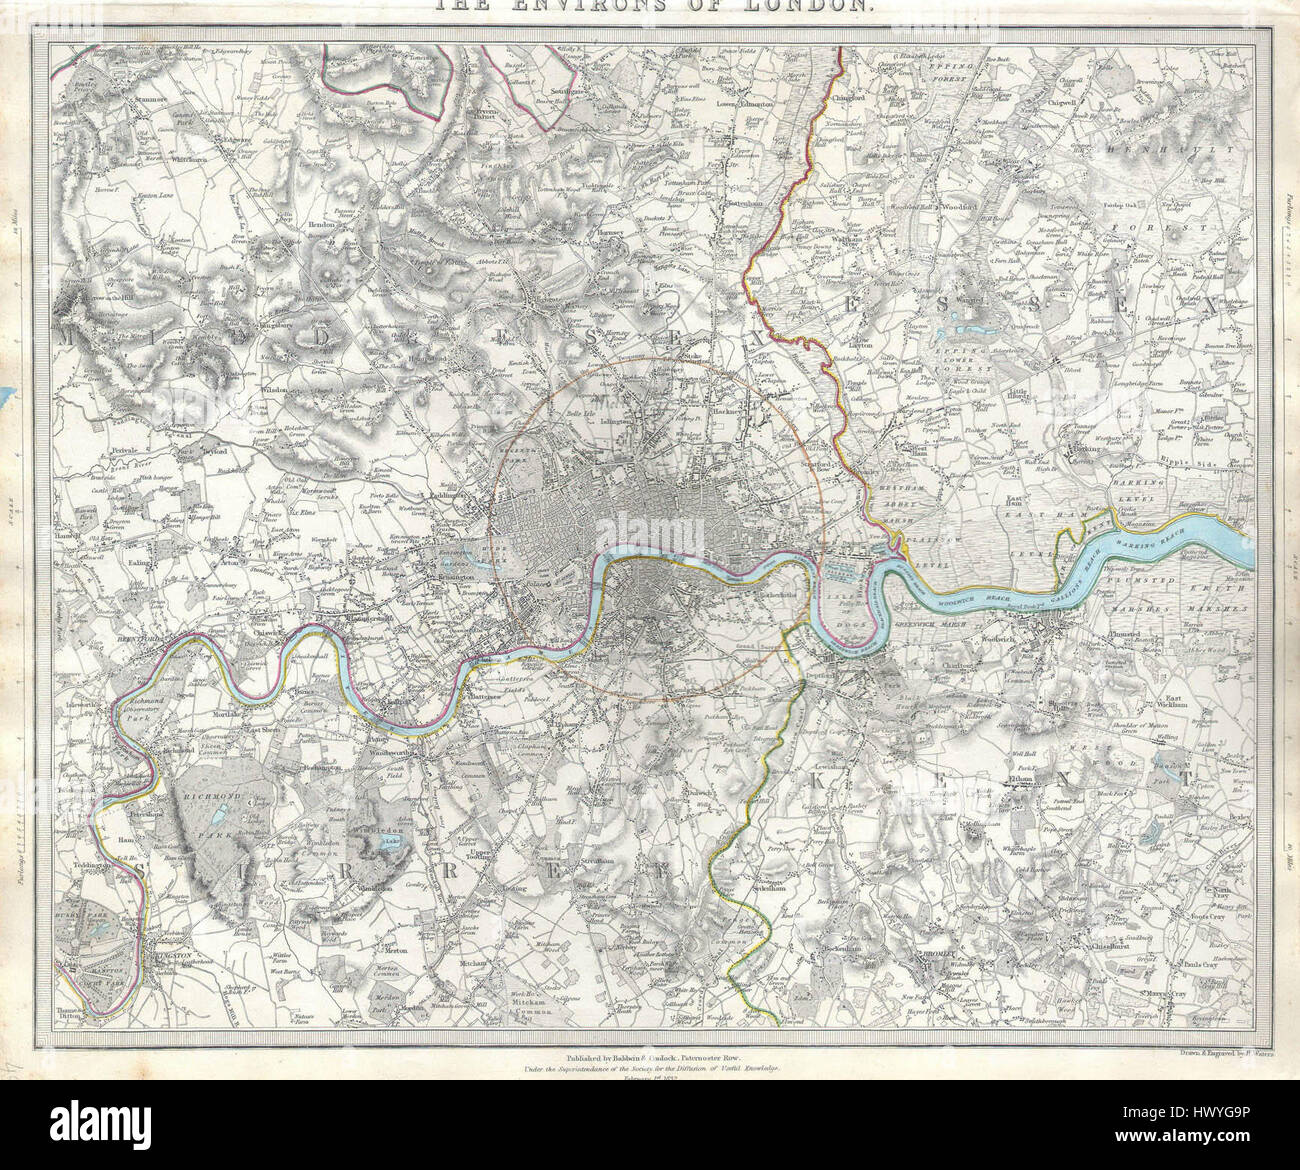 1832 S.D.U.K. Karte von London und Umgebung, England Geographicus LondonEnvirons SDUK 1832 Stockfoto